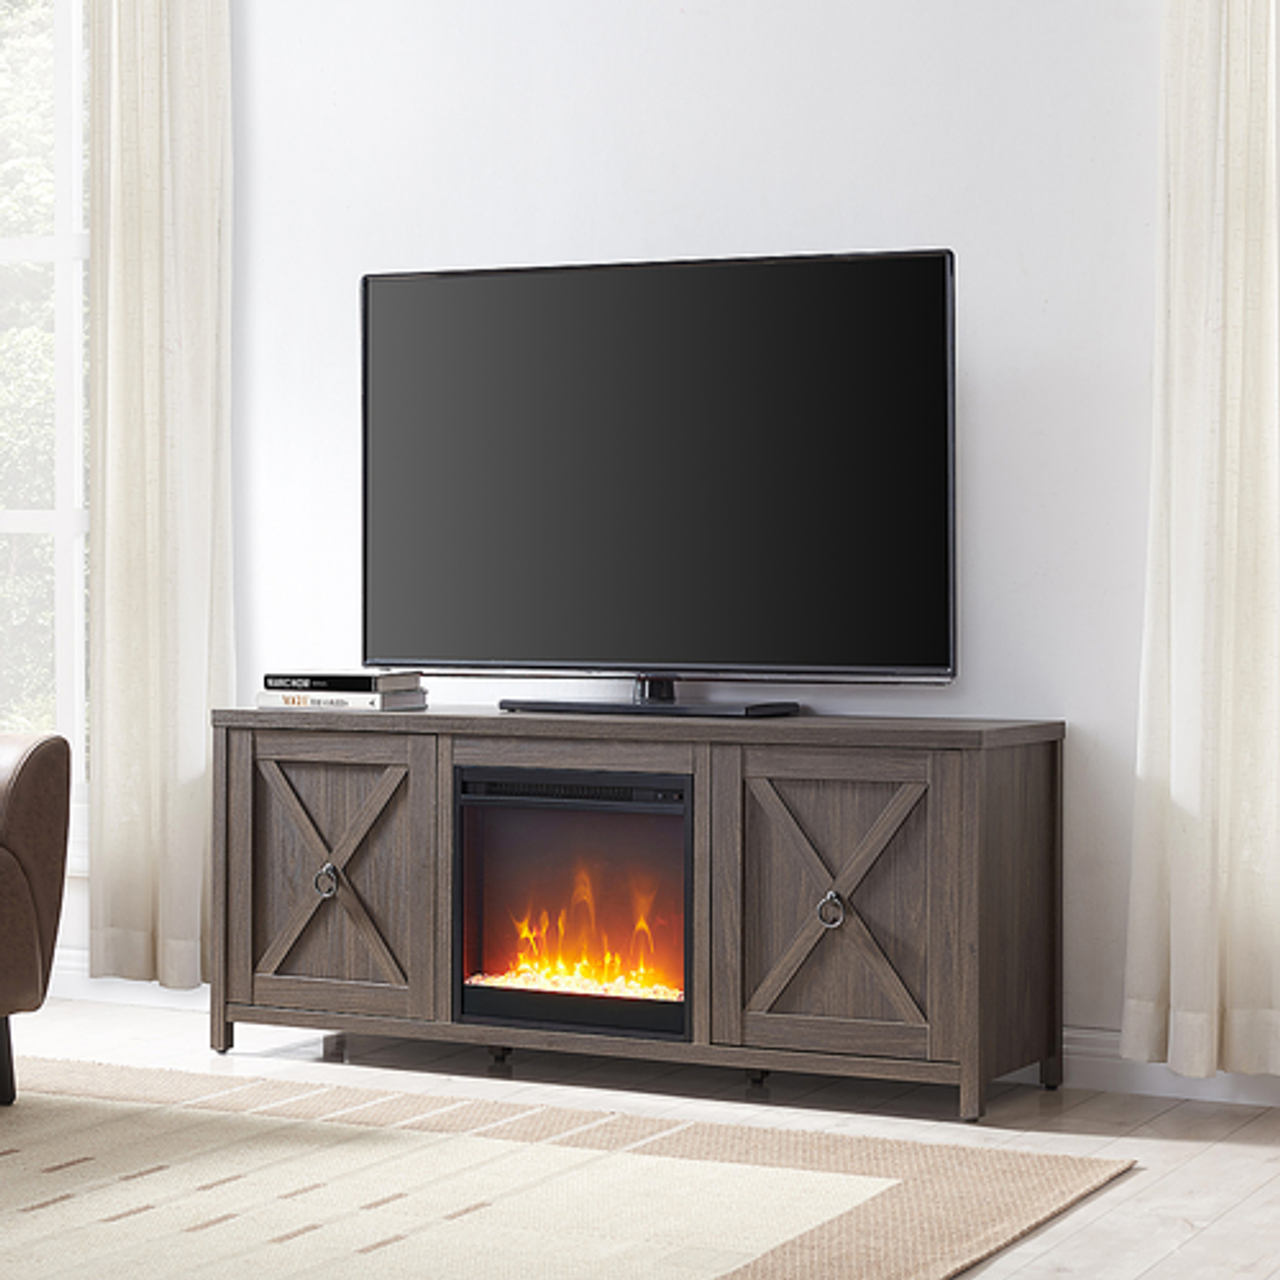 Camden&Wells - Granger Crystal Fireplace TV Stand for TVs up to 65" - Alder Brown